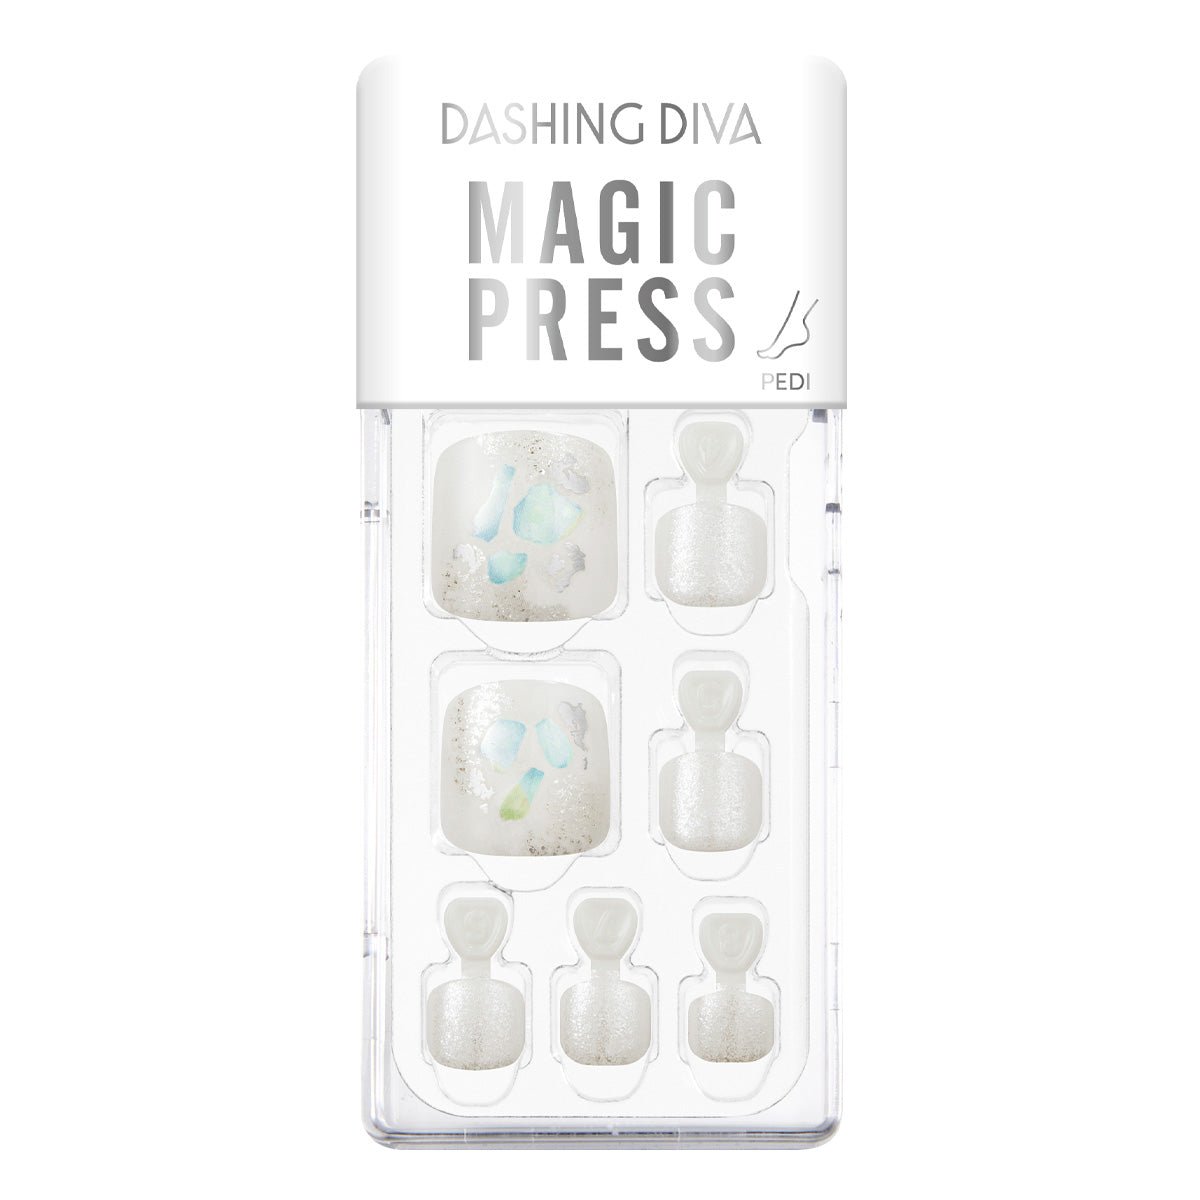 Pure Glass - Magic Press Art - Pedicure - Dashing Diva Singapore